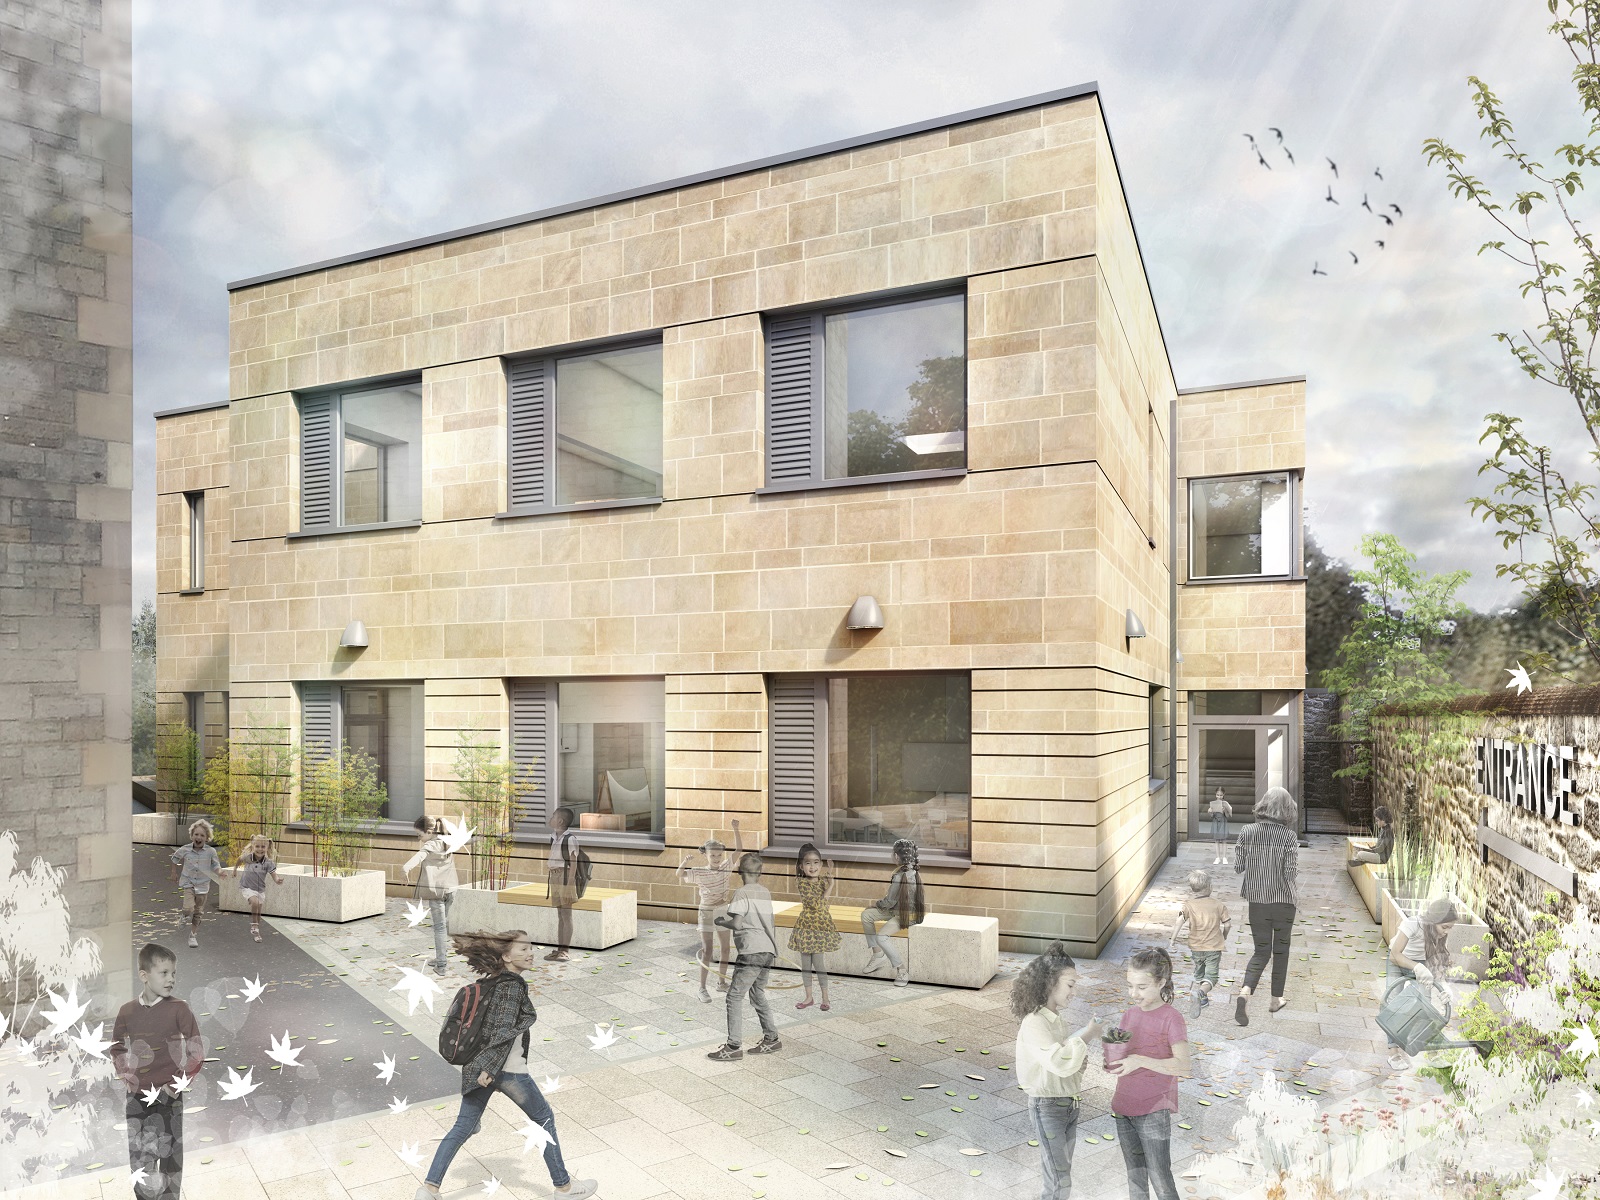 Work progresses at pace at Edinburgh’s first Passivhaus school